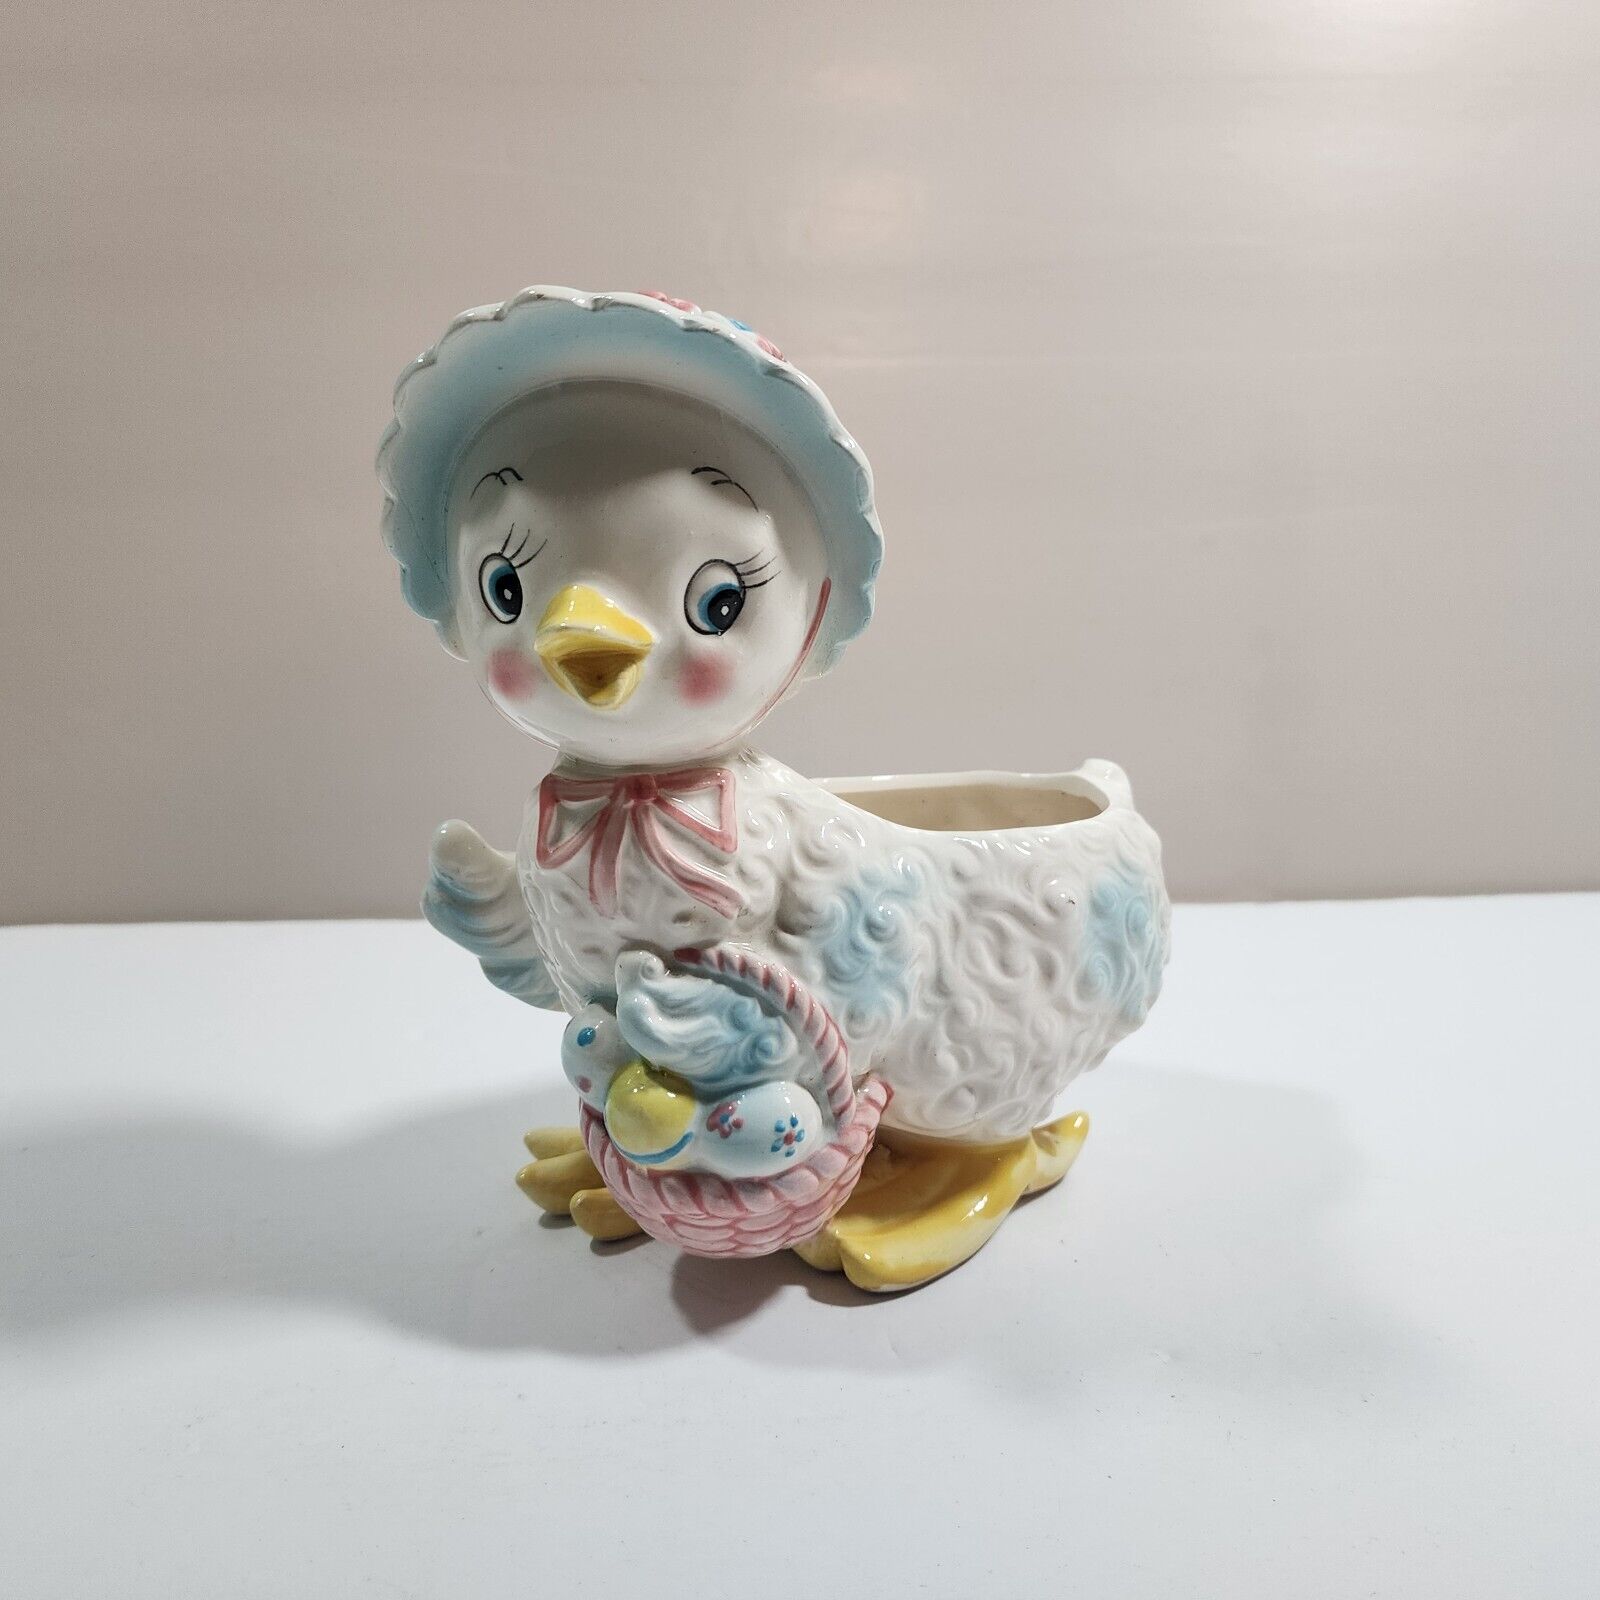 Vintage Relpo Ceramic Planter Anthropomorphic Baby Duckling with Bonnet Big Eyes